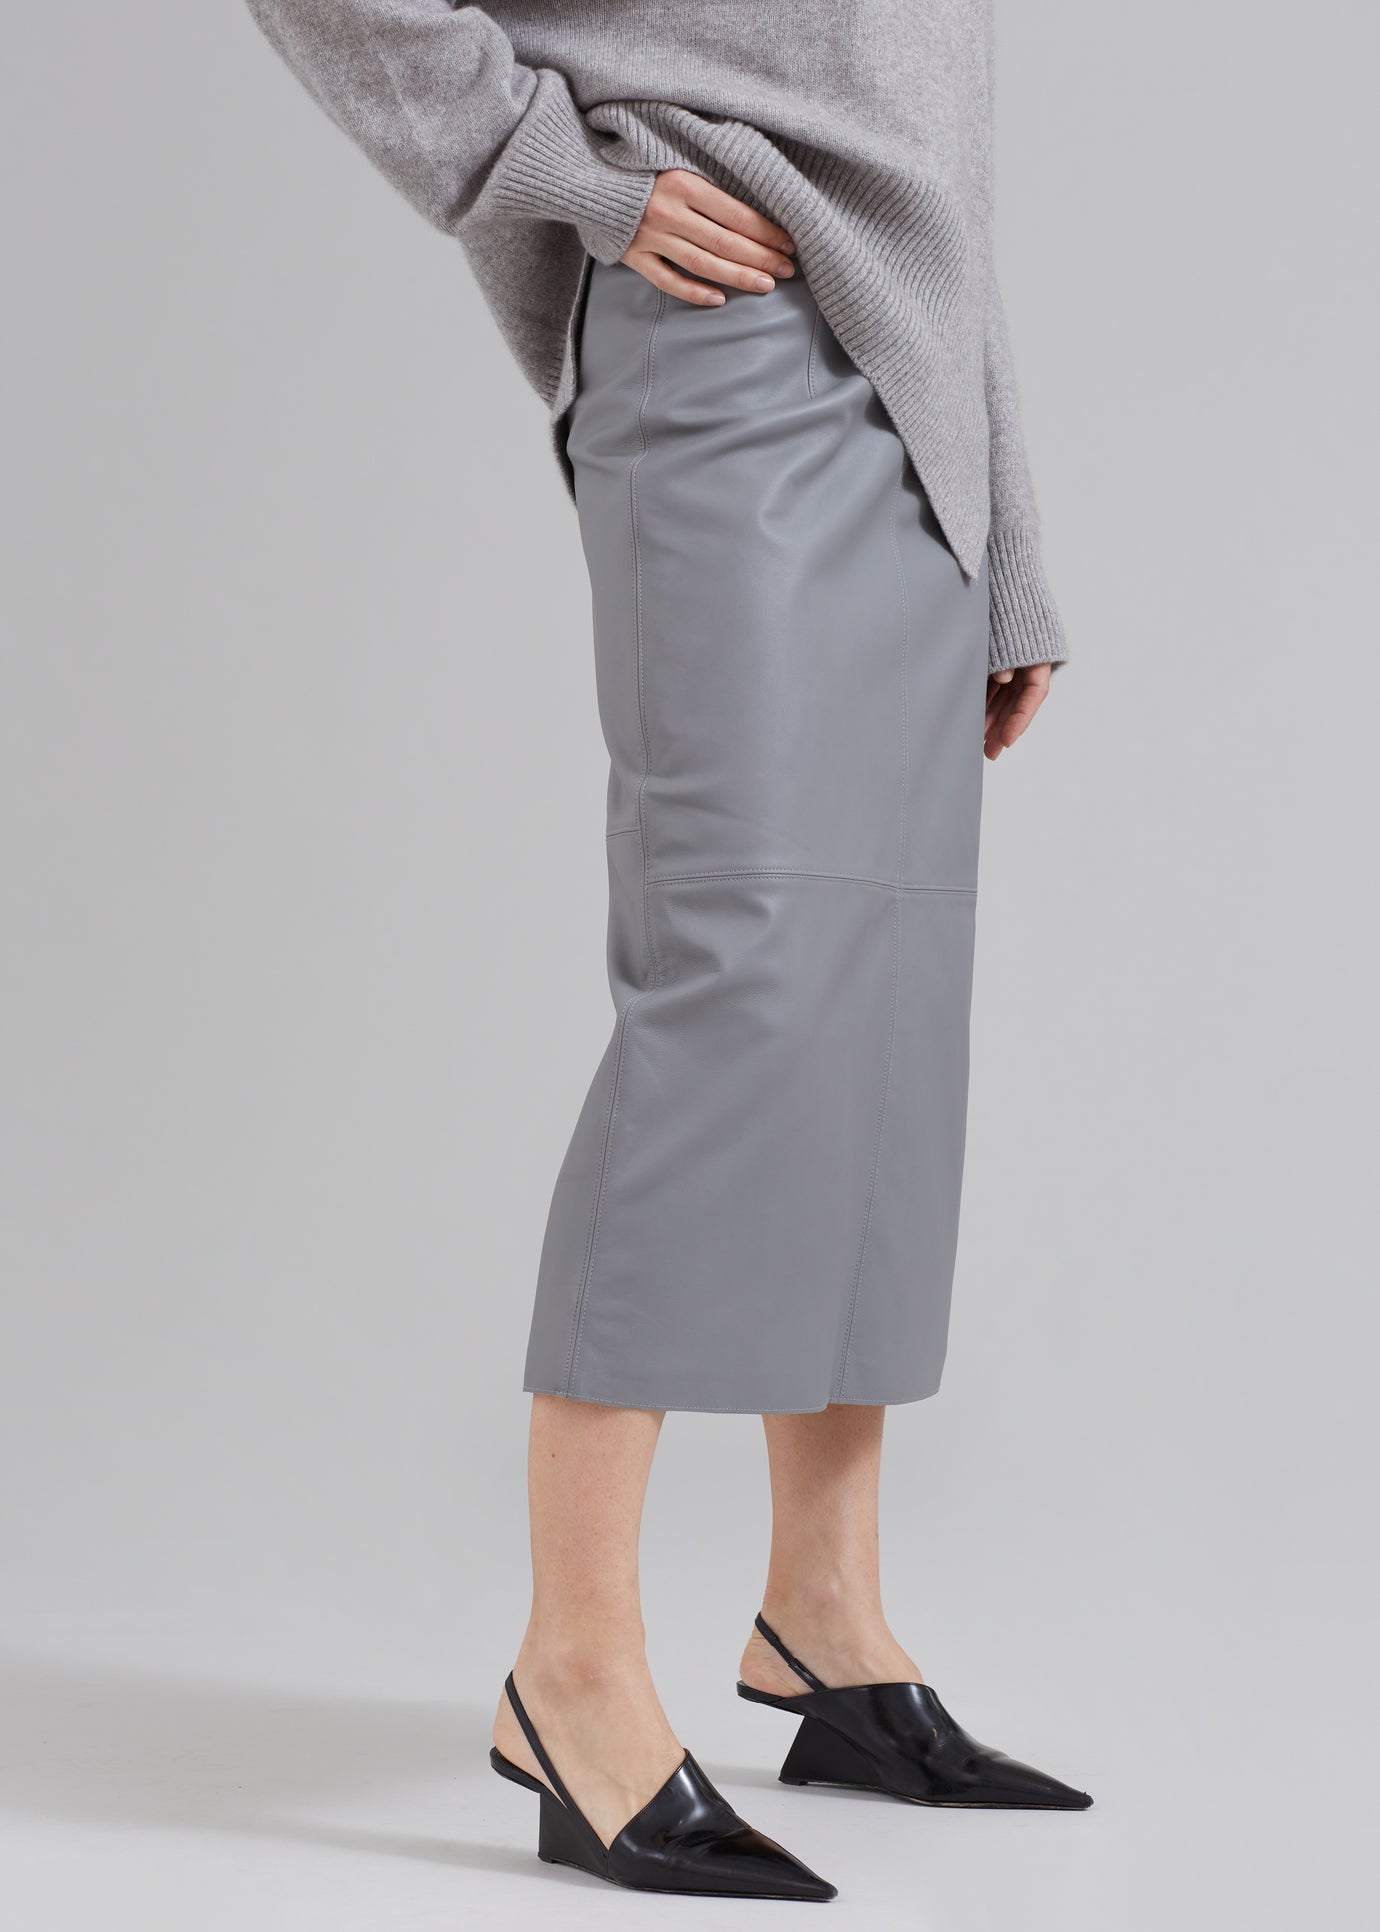 Heather Leather Pencil Skirt - Grey